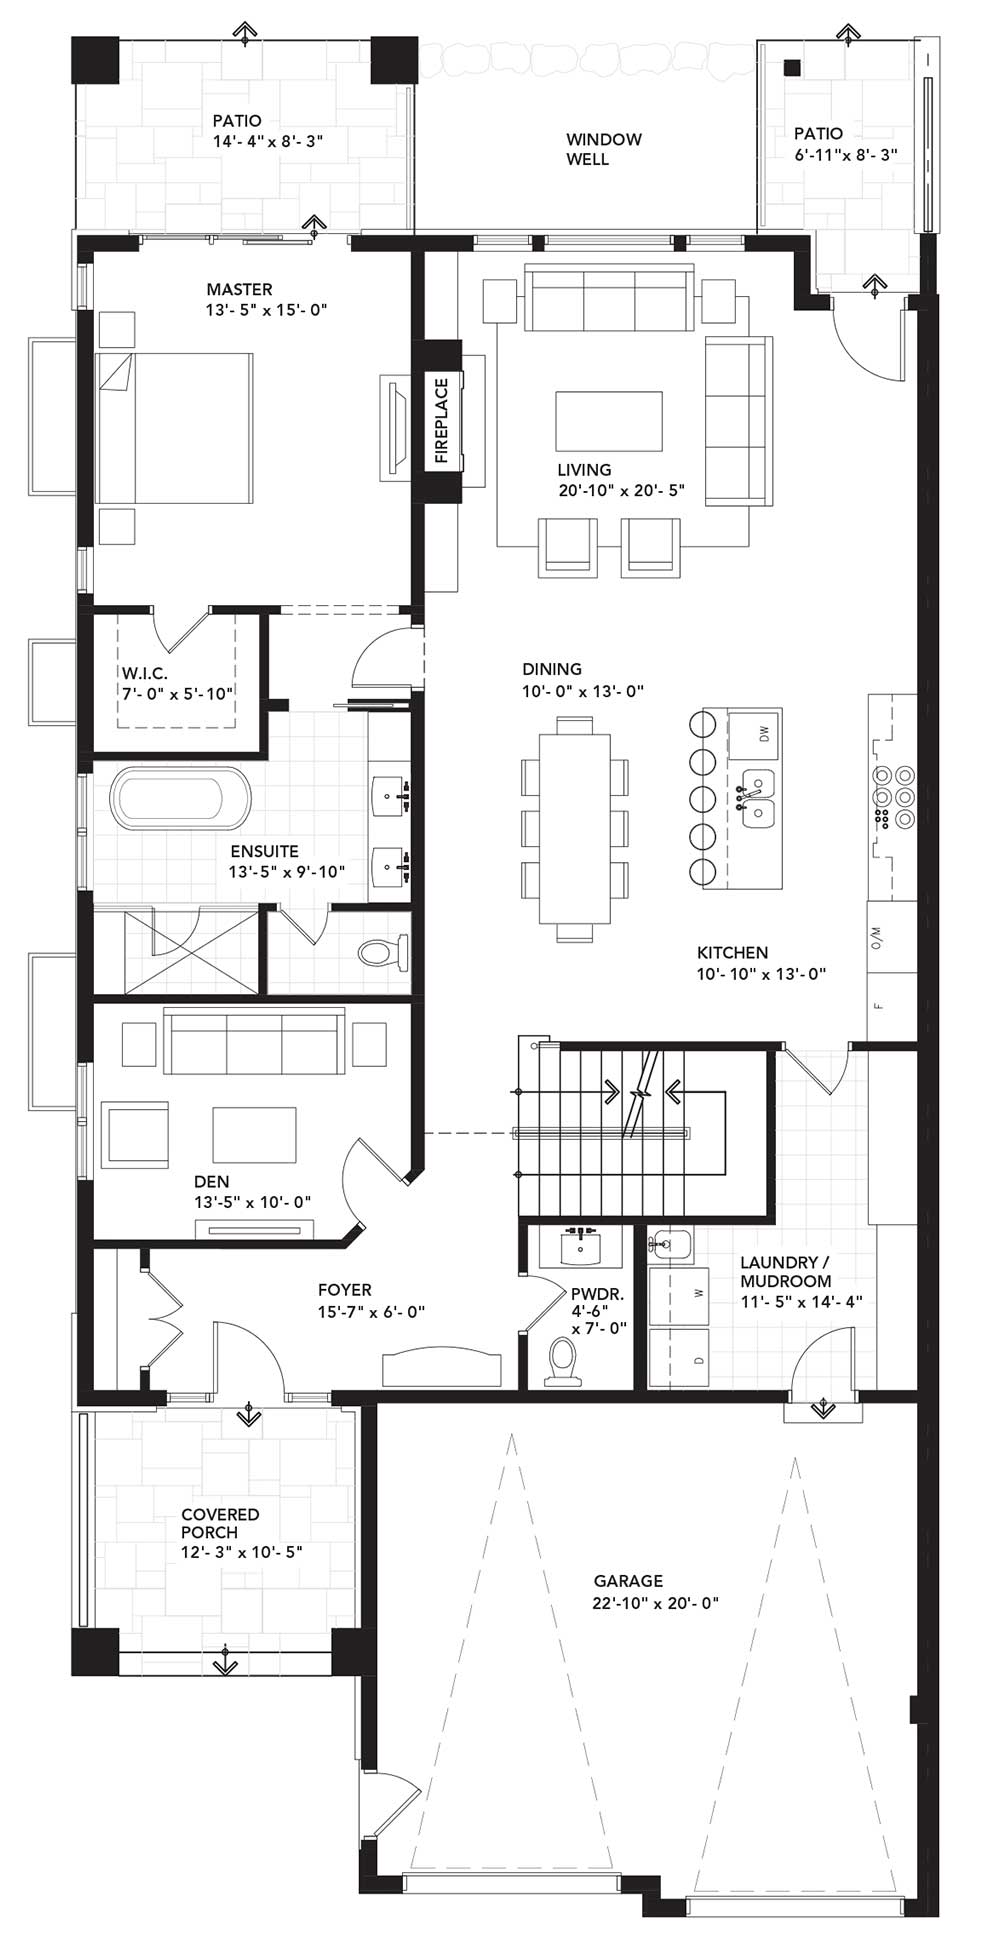 Main Floor Plan - Left Unit